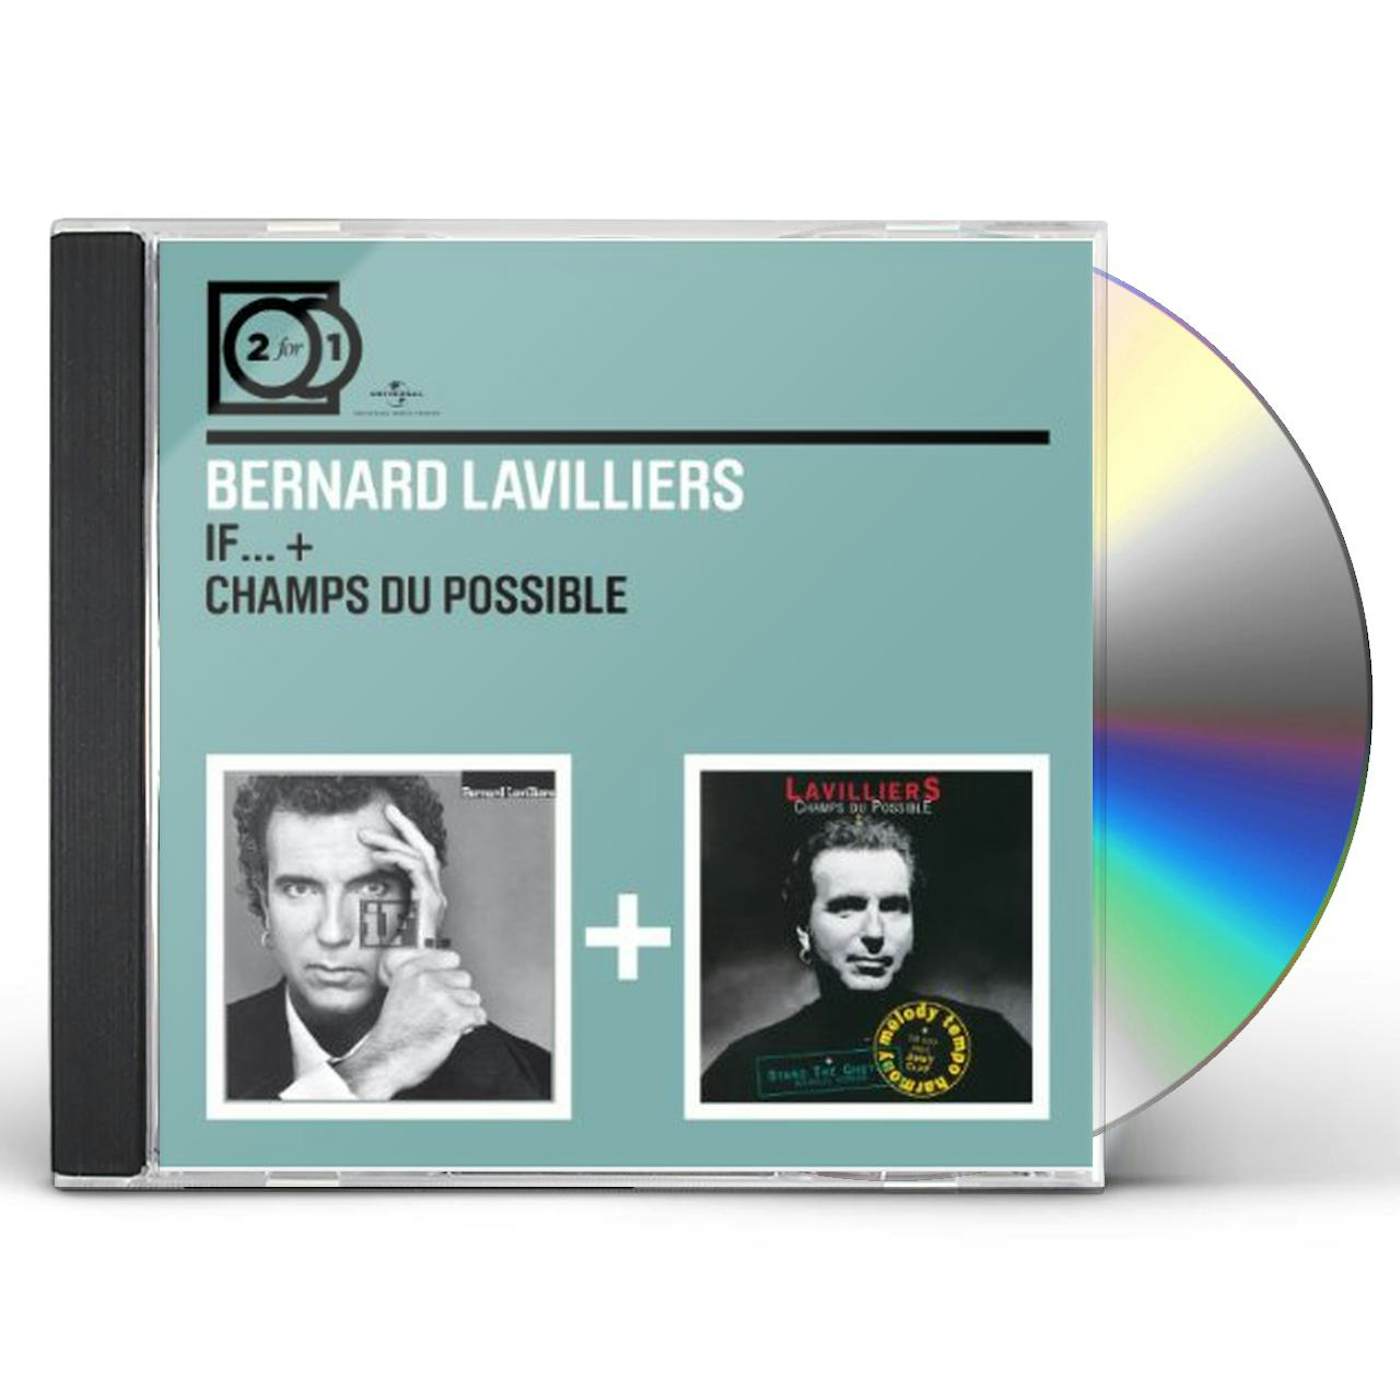 Bernard Lavilliers IF/CHAMPS DU POSSIBLE CD